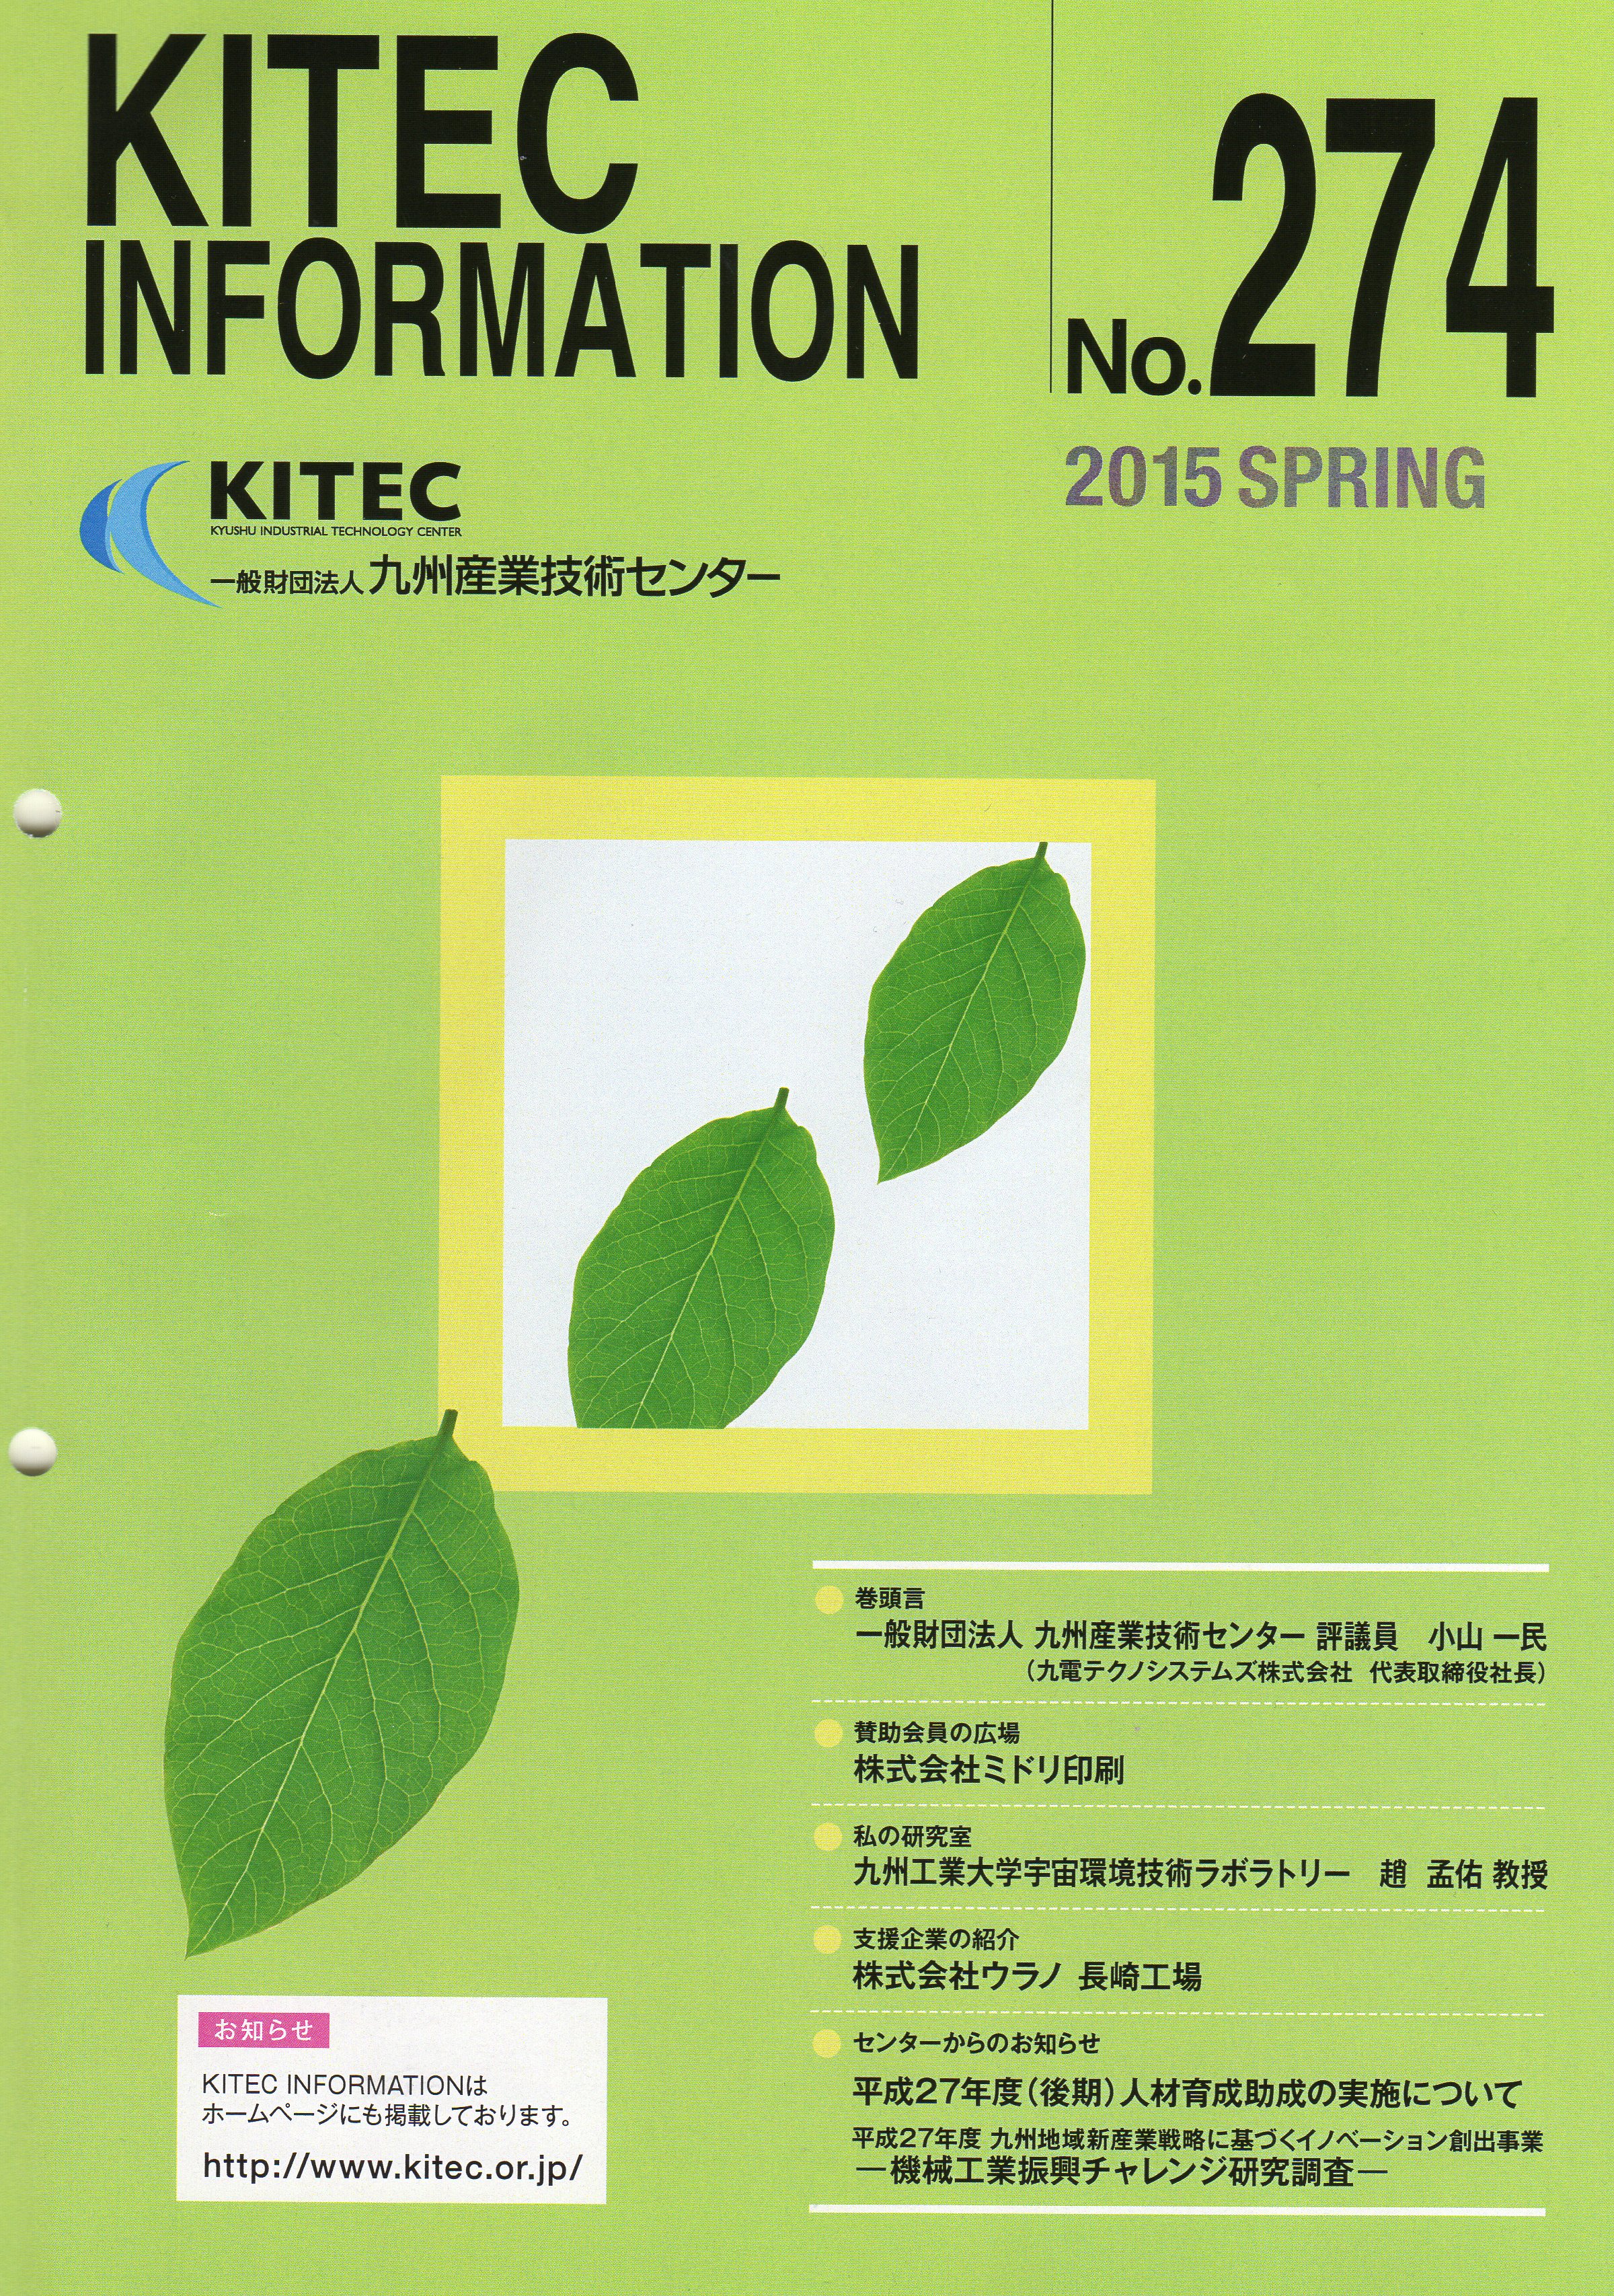 KITEC INFORMATION No.274 2015 SPRING